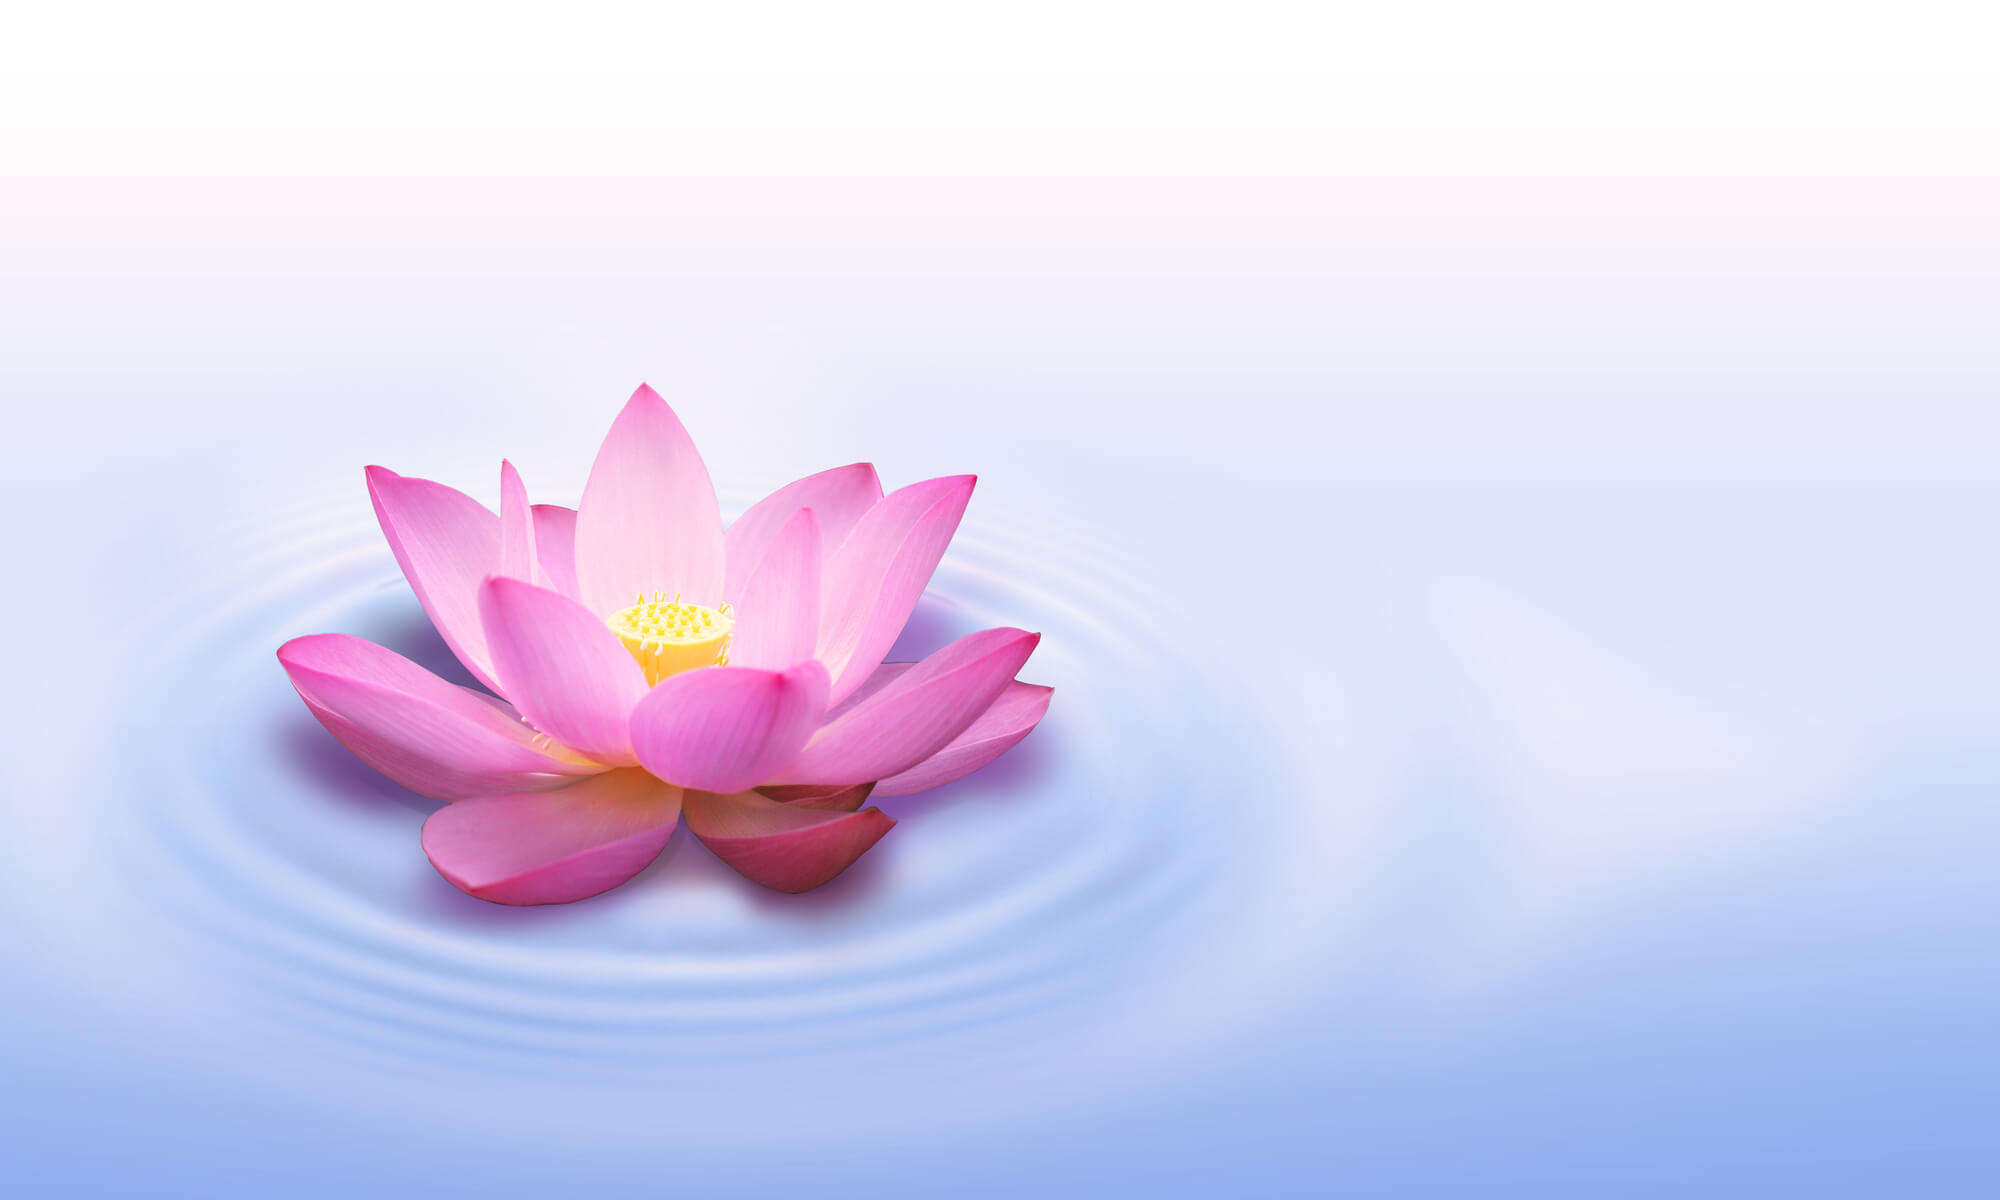 The lotus flower. Illustration: depositphotos.com